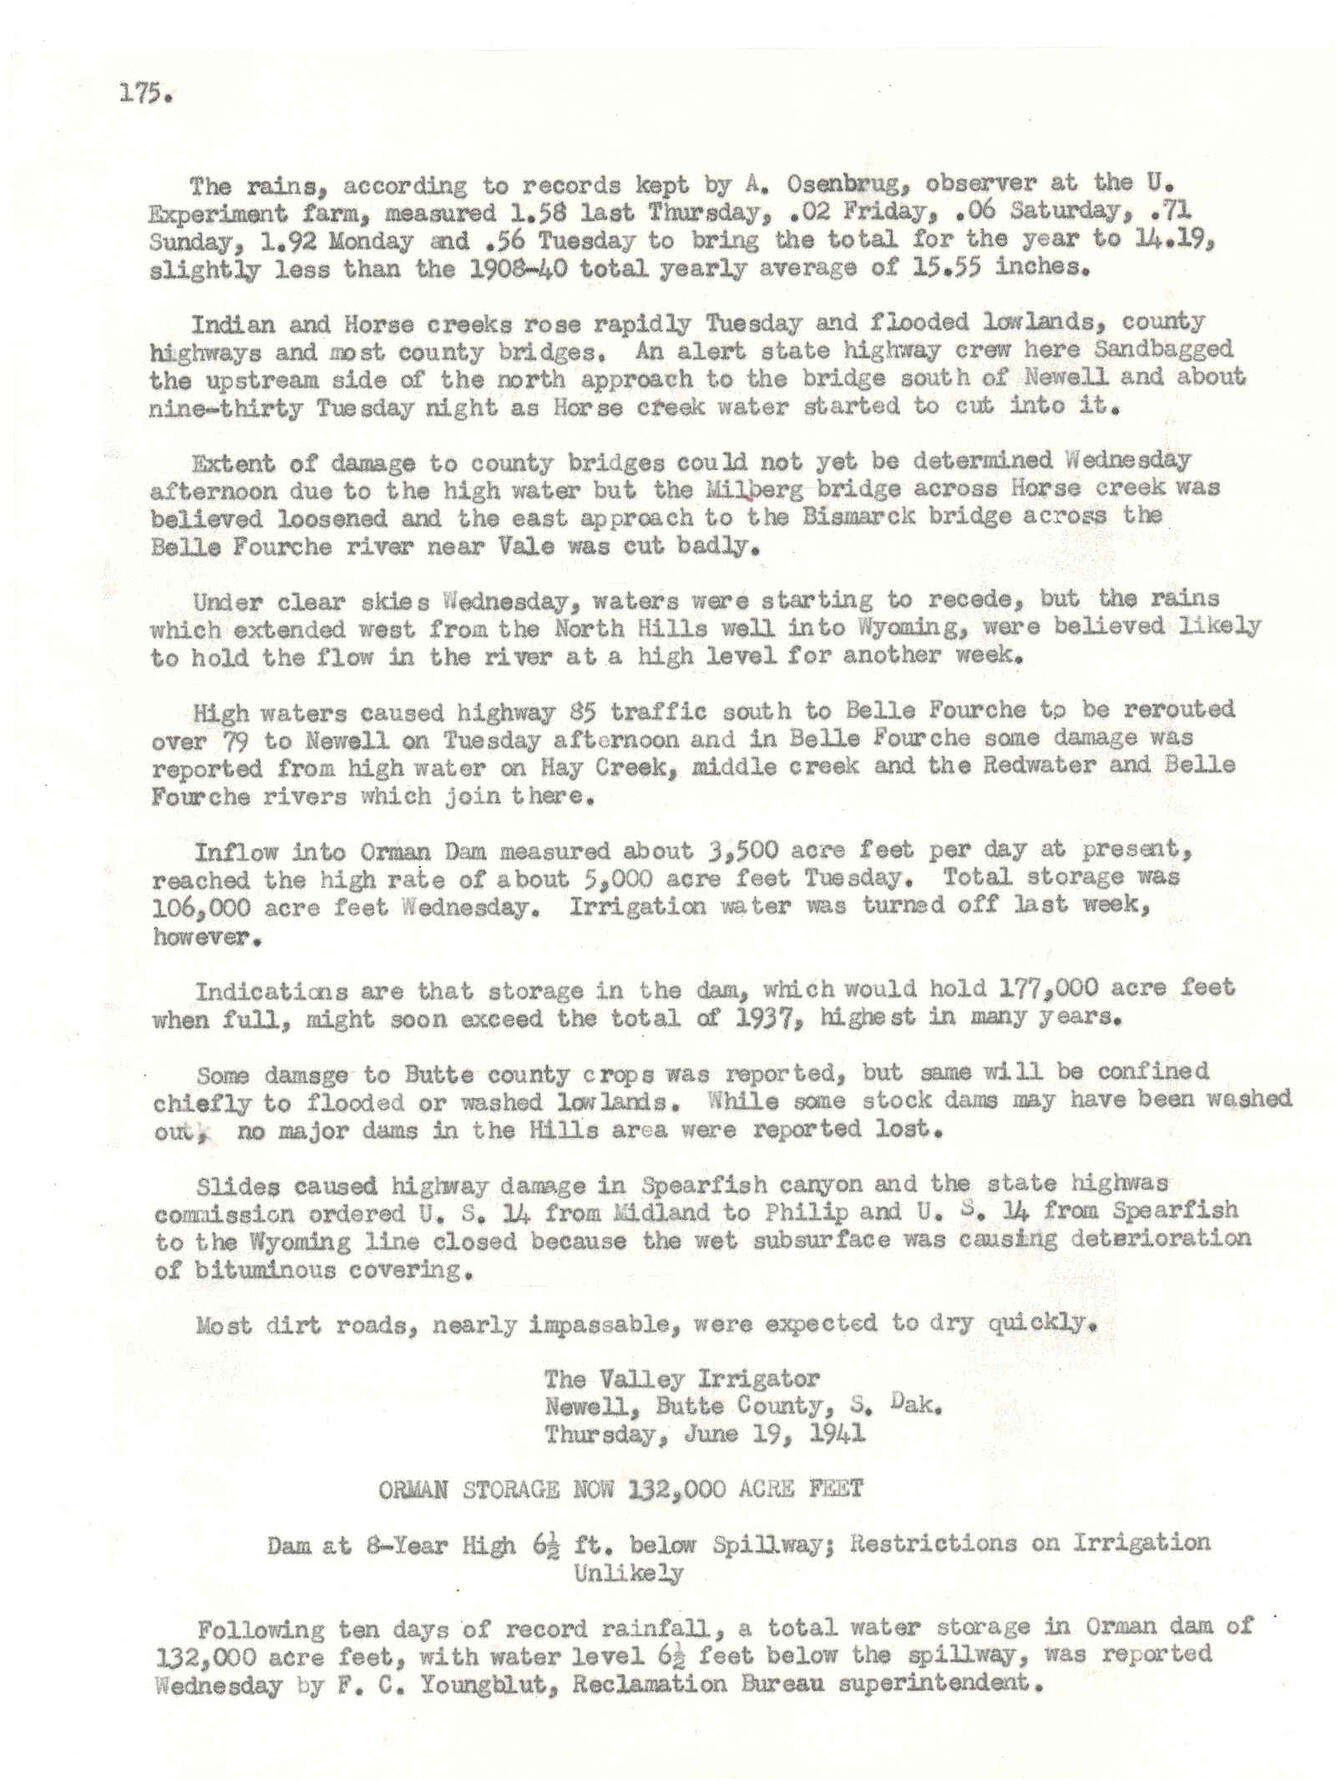 Valley Irrigator (June 12, 1941) Page 2